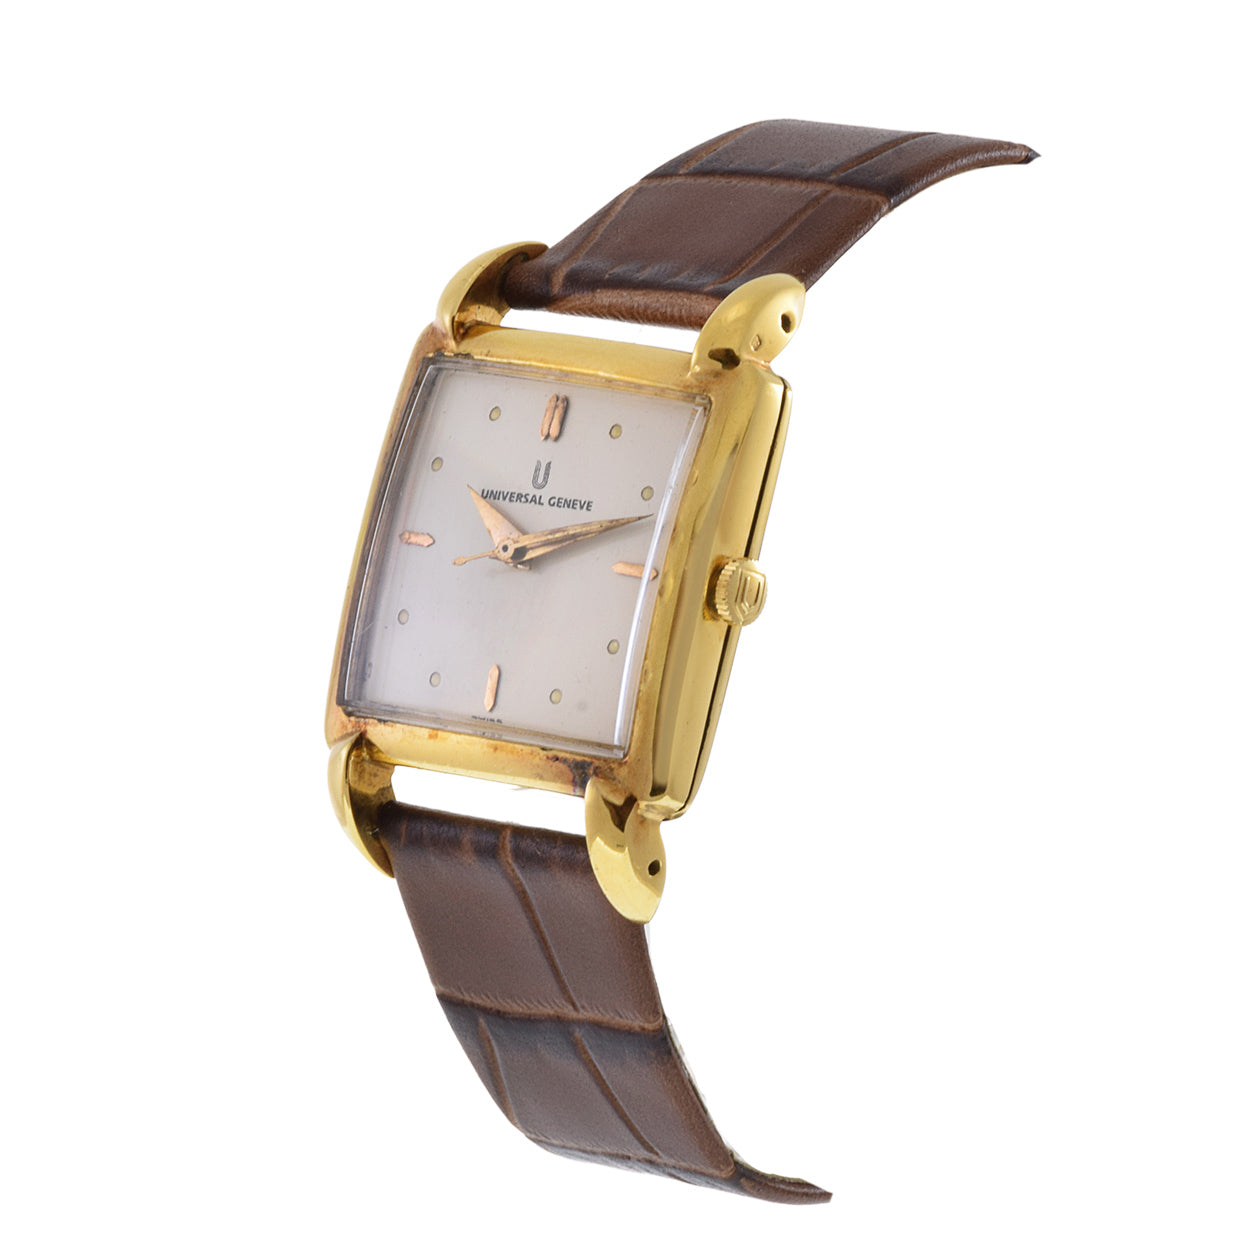 Vintage 1960s Universal Genève Watch